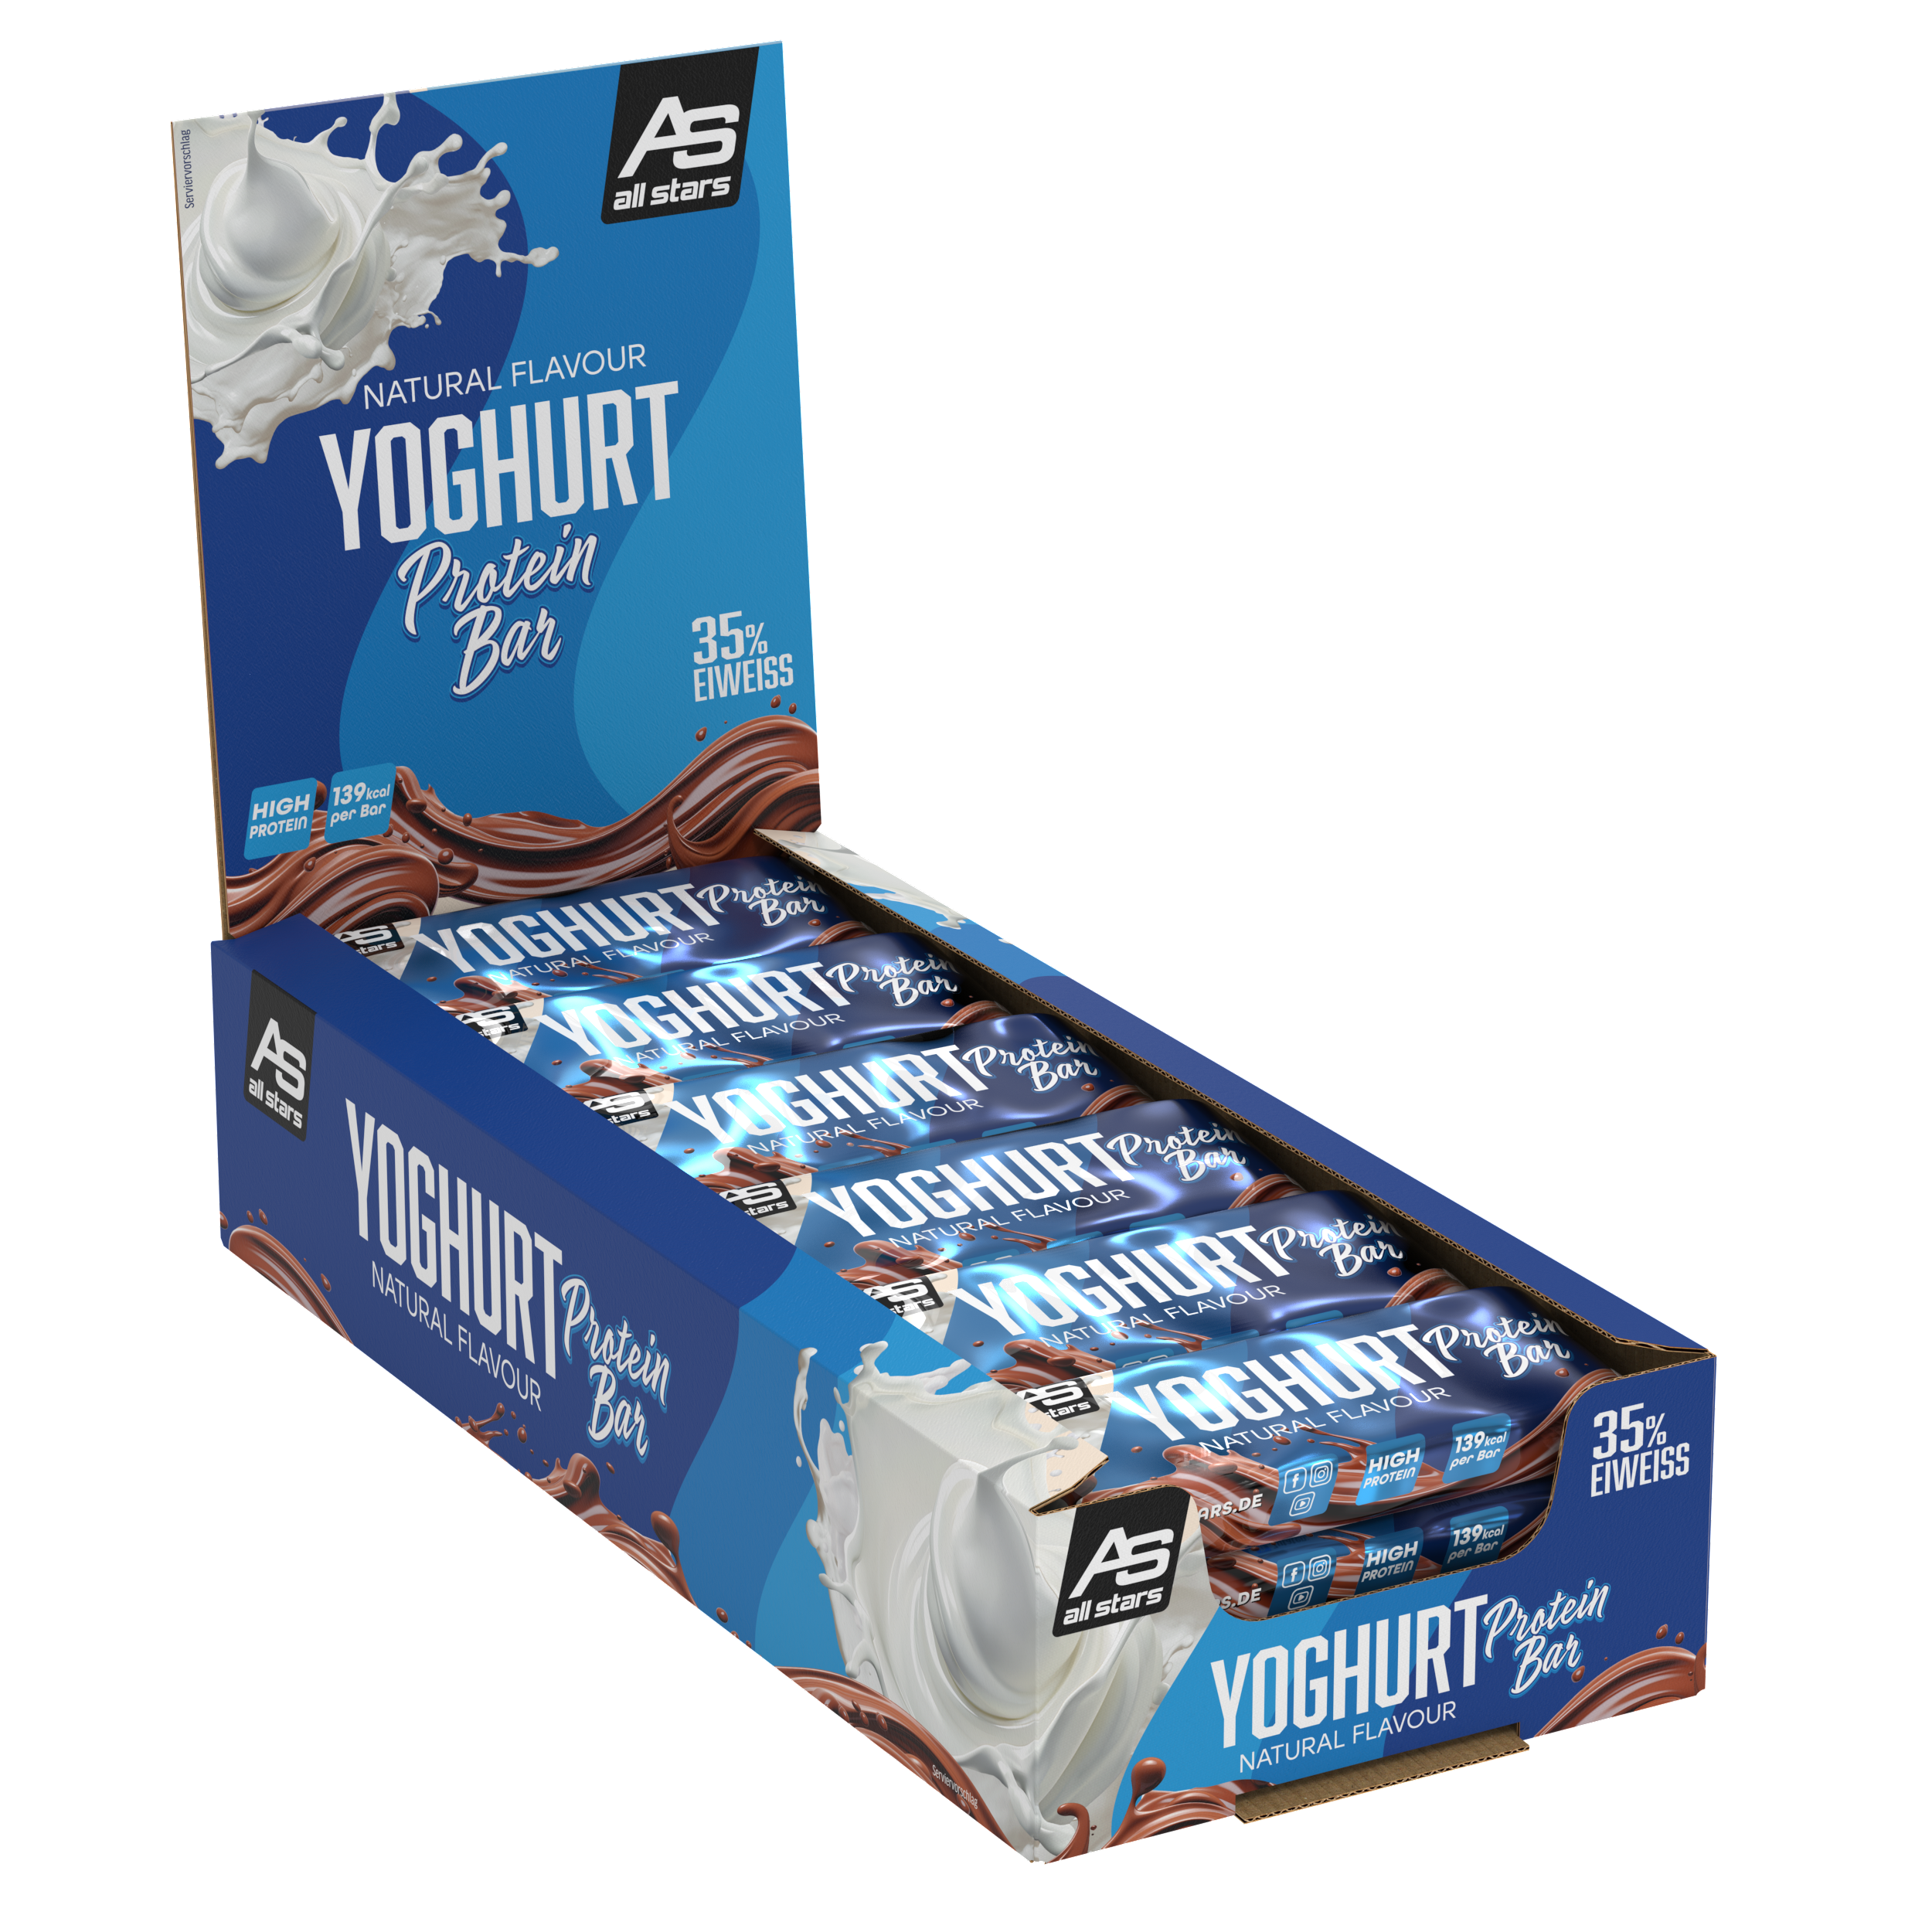 ALL STARS Yoghurt Protein Bar 